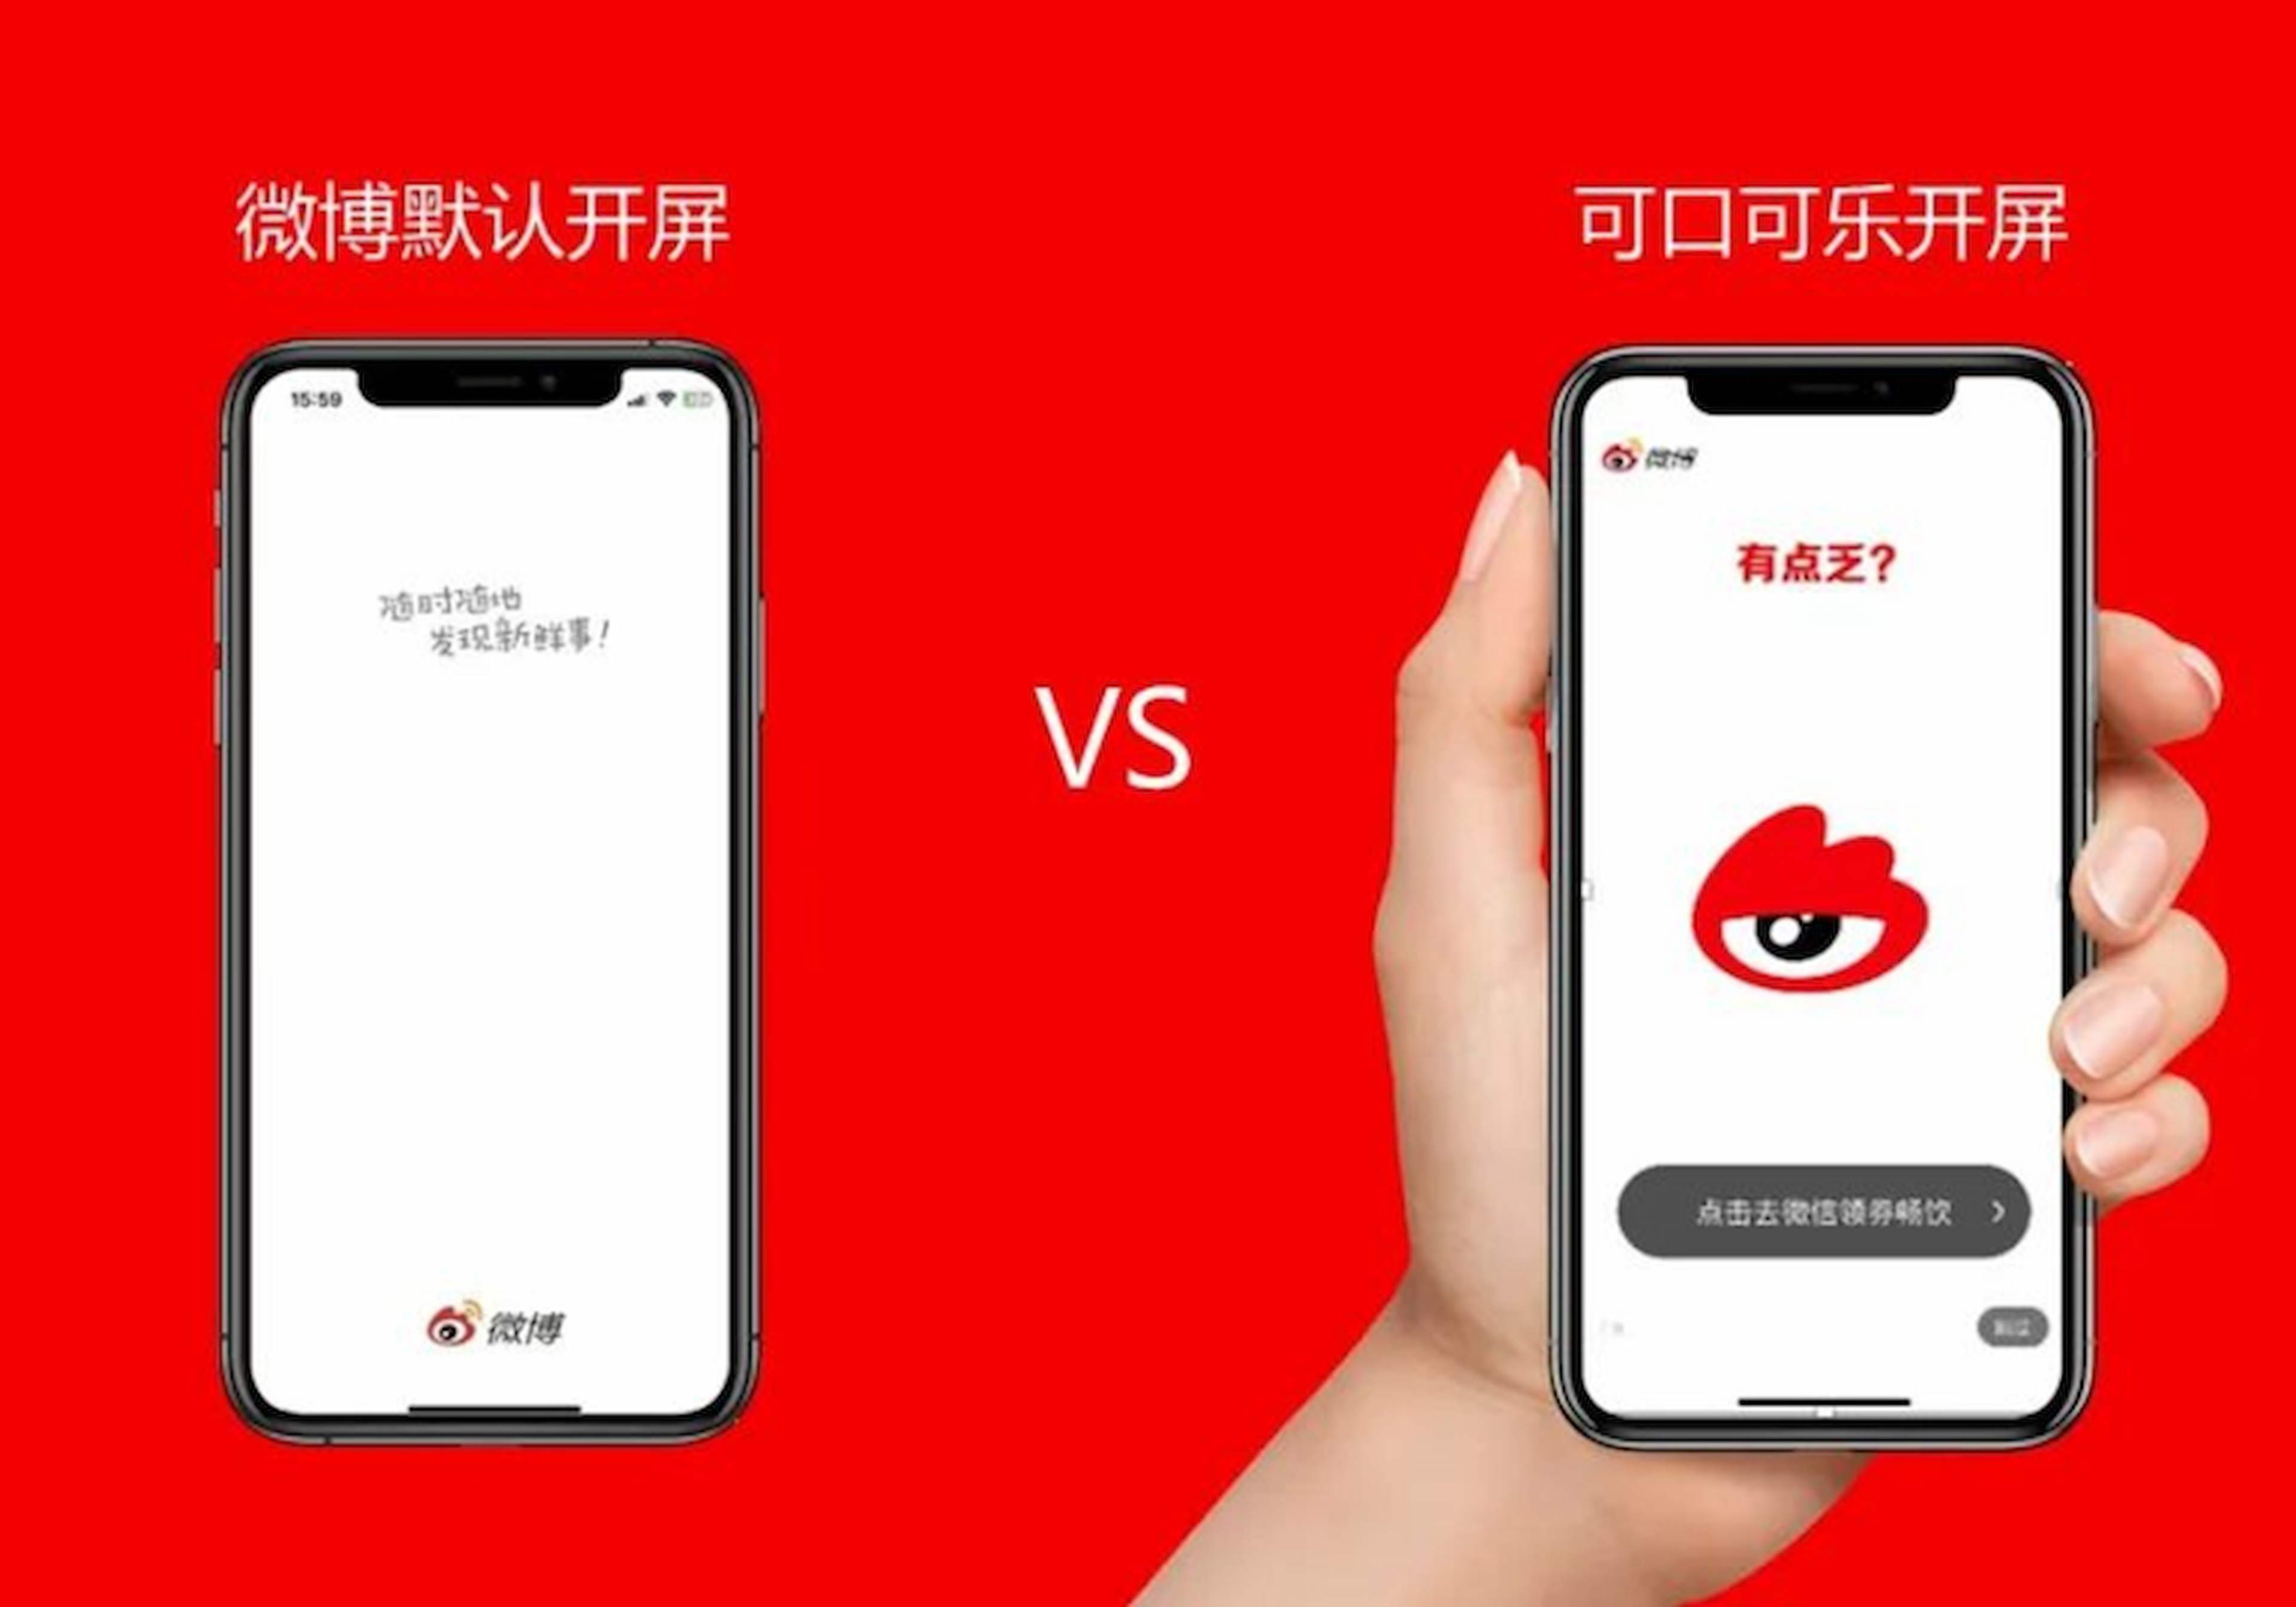 Campaign image of Weibo X Coca-Cola 